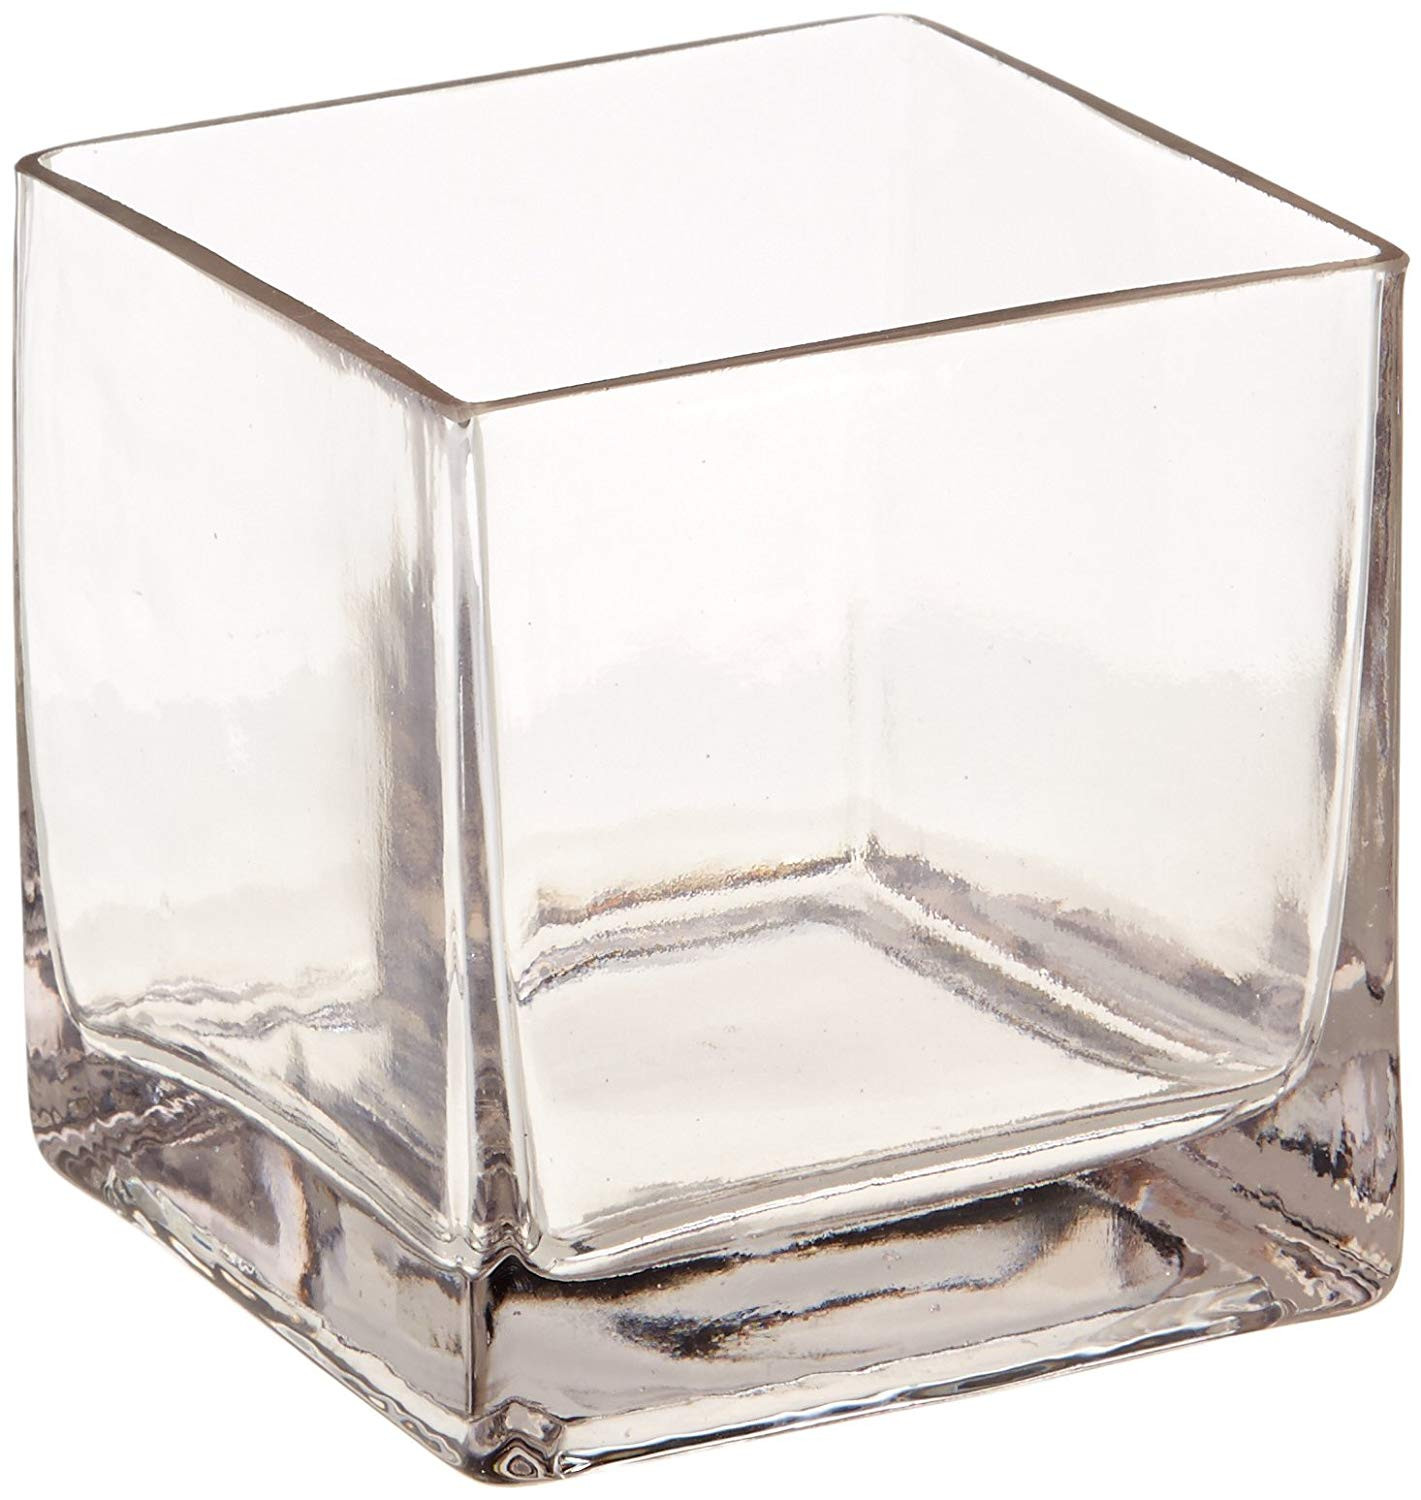 30 Trendy ashland Cube Glass Vase 2023 free download ashland cube glass vase of amazon com 12piece 4 square crystal clear glass vase home kitchen regarding 71 jezfmvnl sl1500